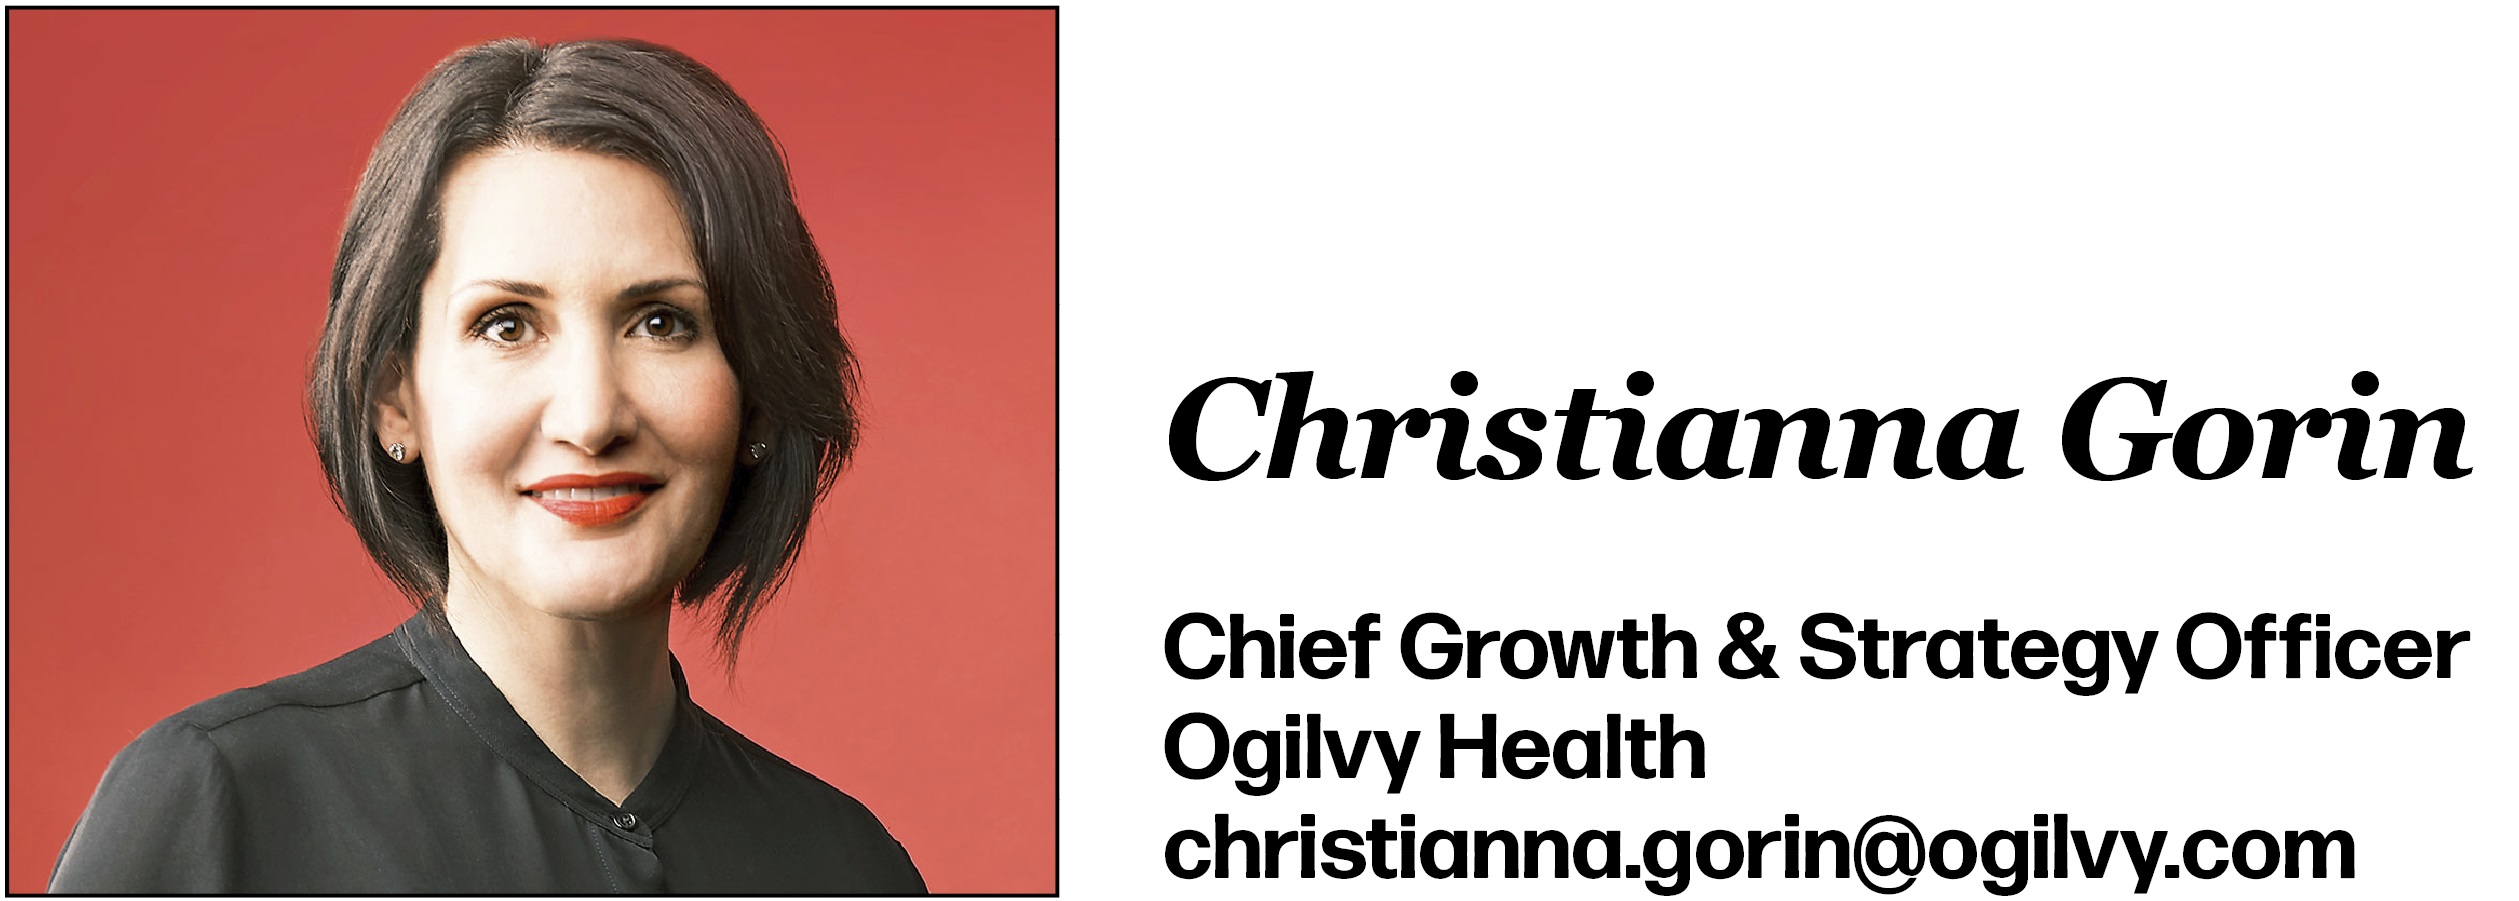 Christianna Gorin Chief Growth & Strategy Officer Ogilvy Health christianna.gorin@ogilvy.com